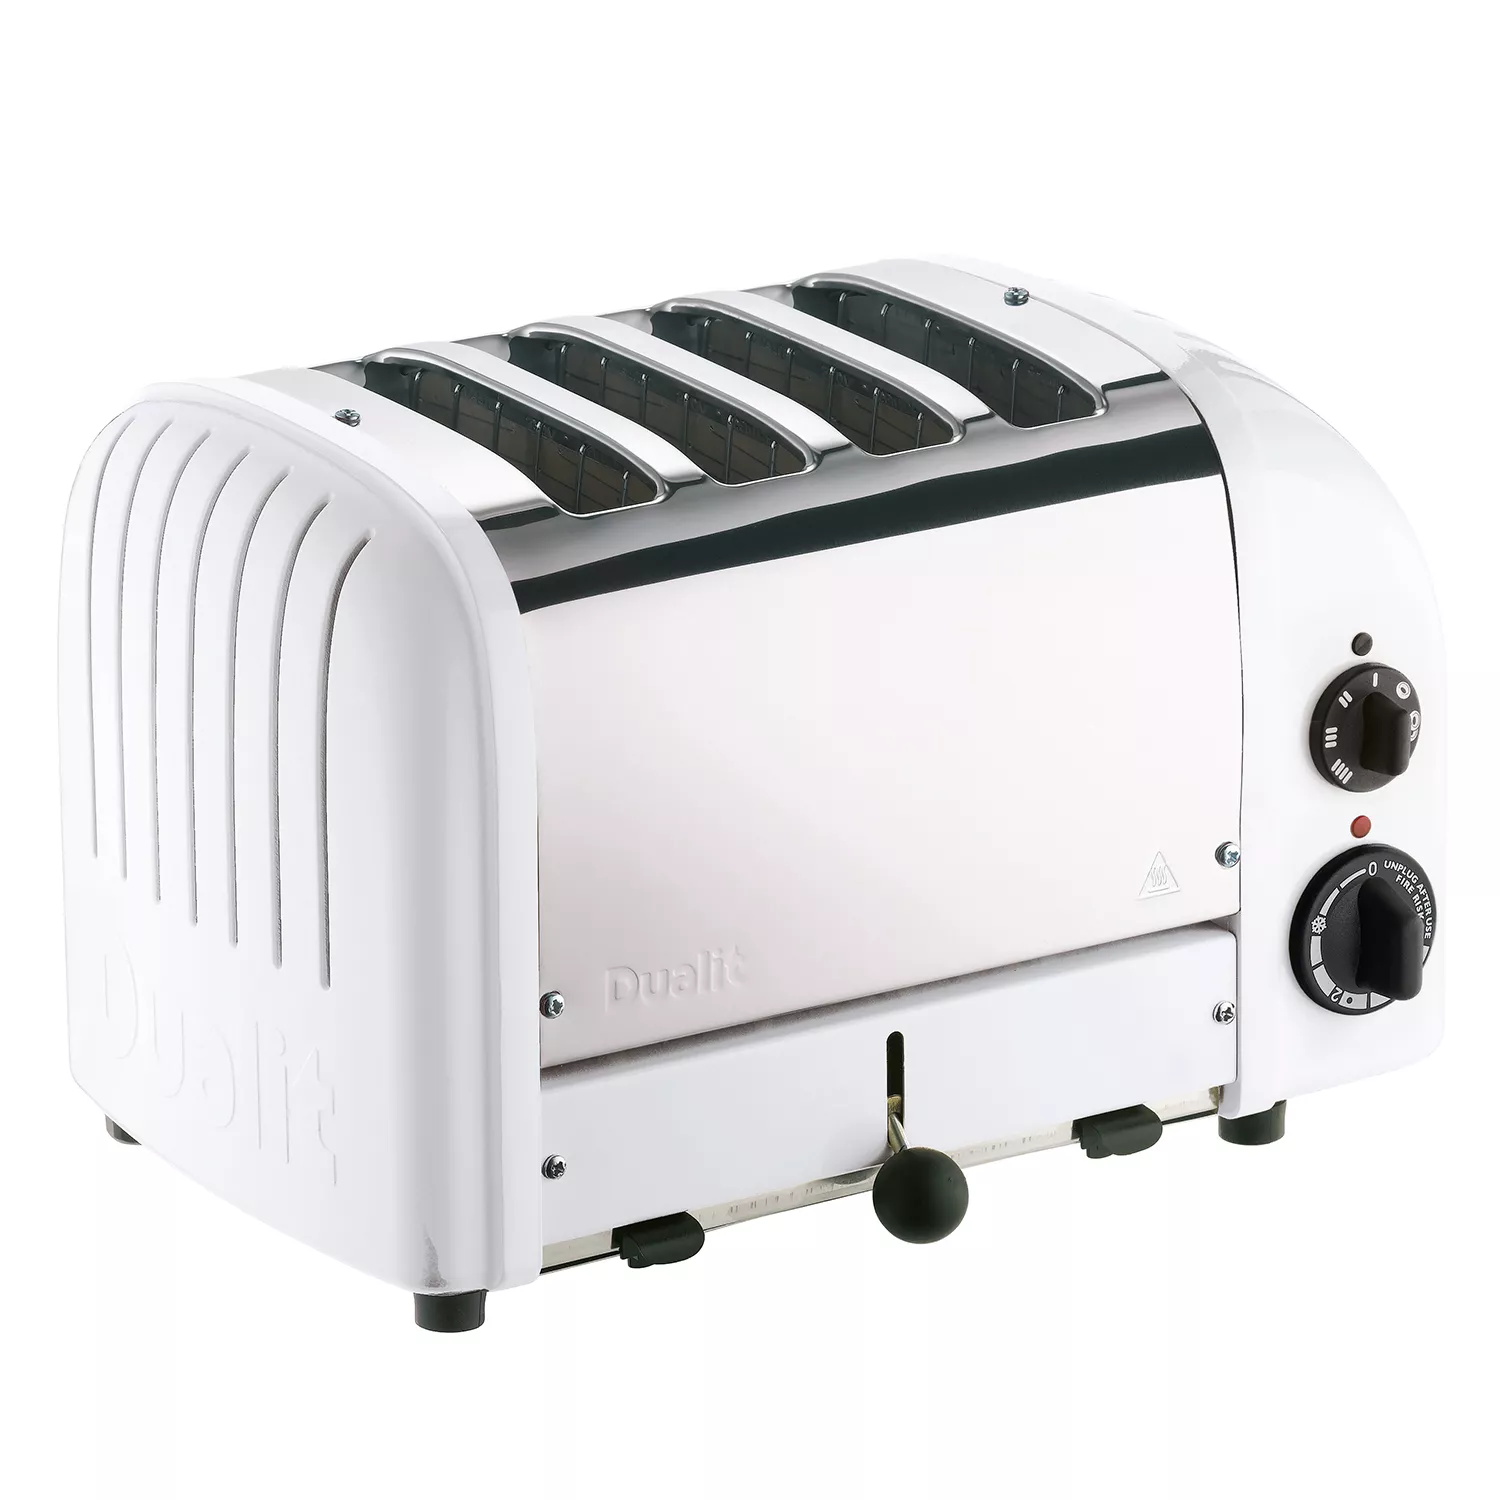 Dualit Classic Four-Slice Toaster